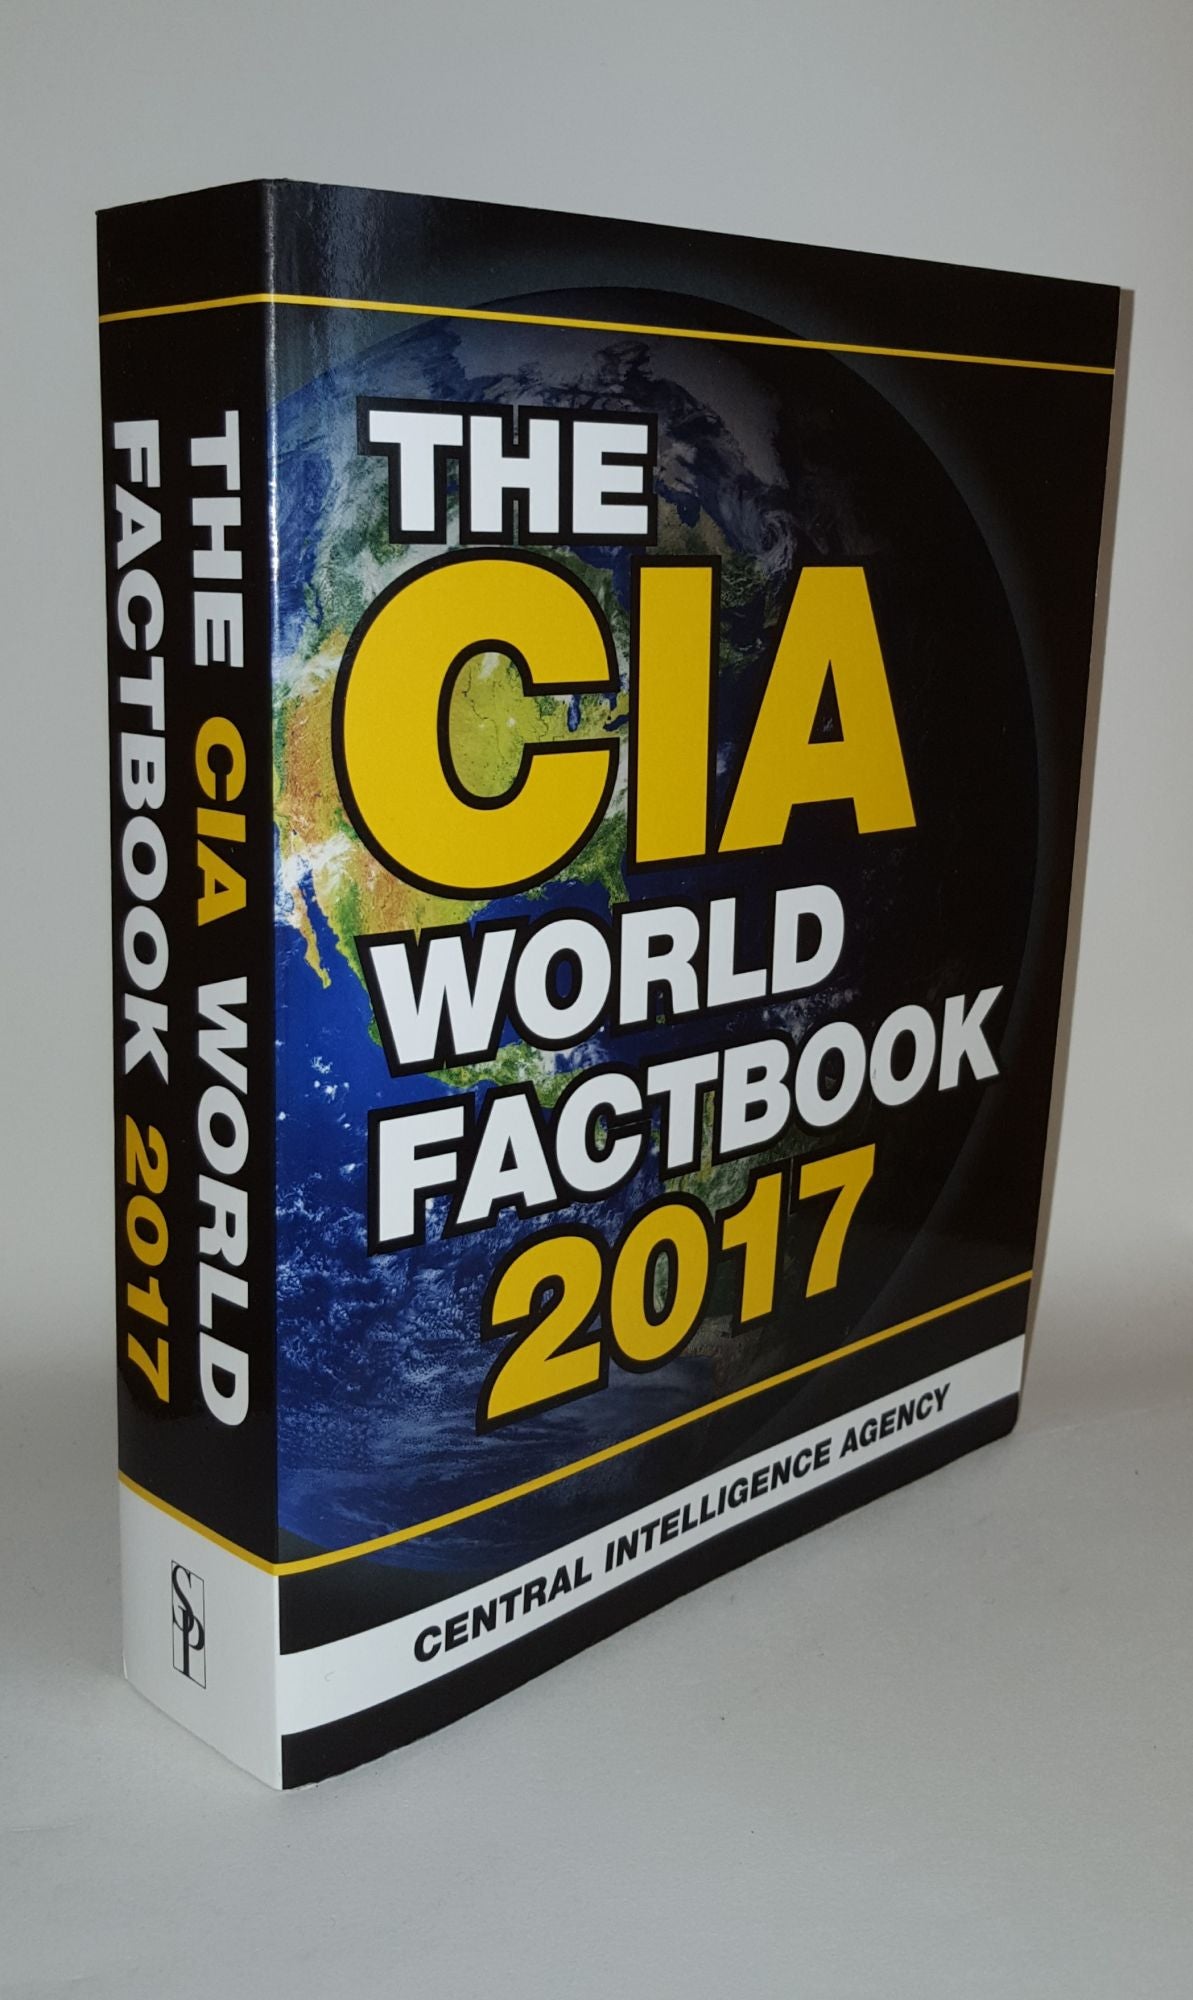 Central Intelligence Agency - The Cia World Handbook 2017